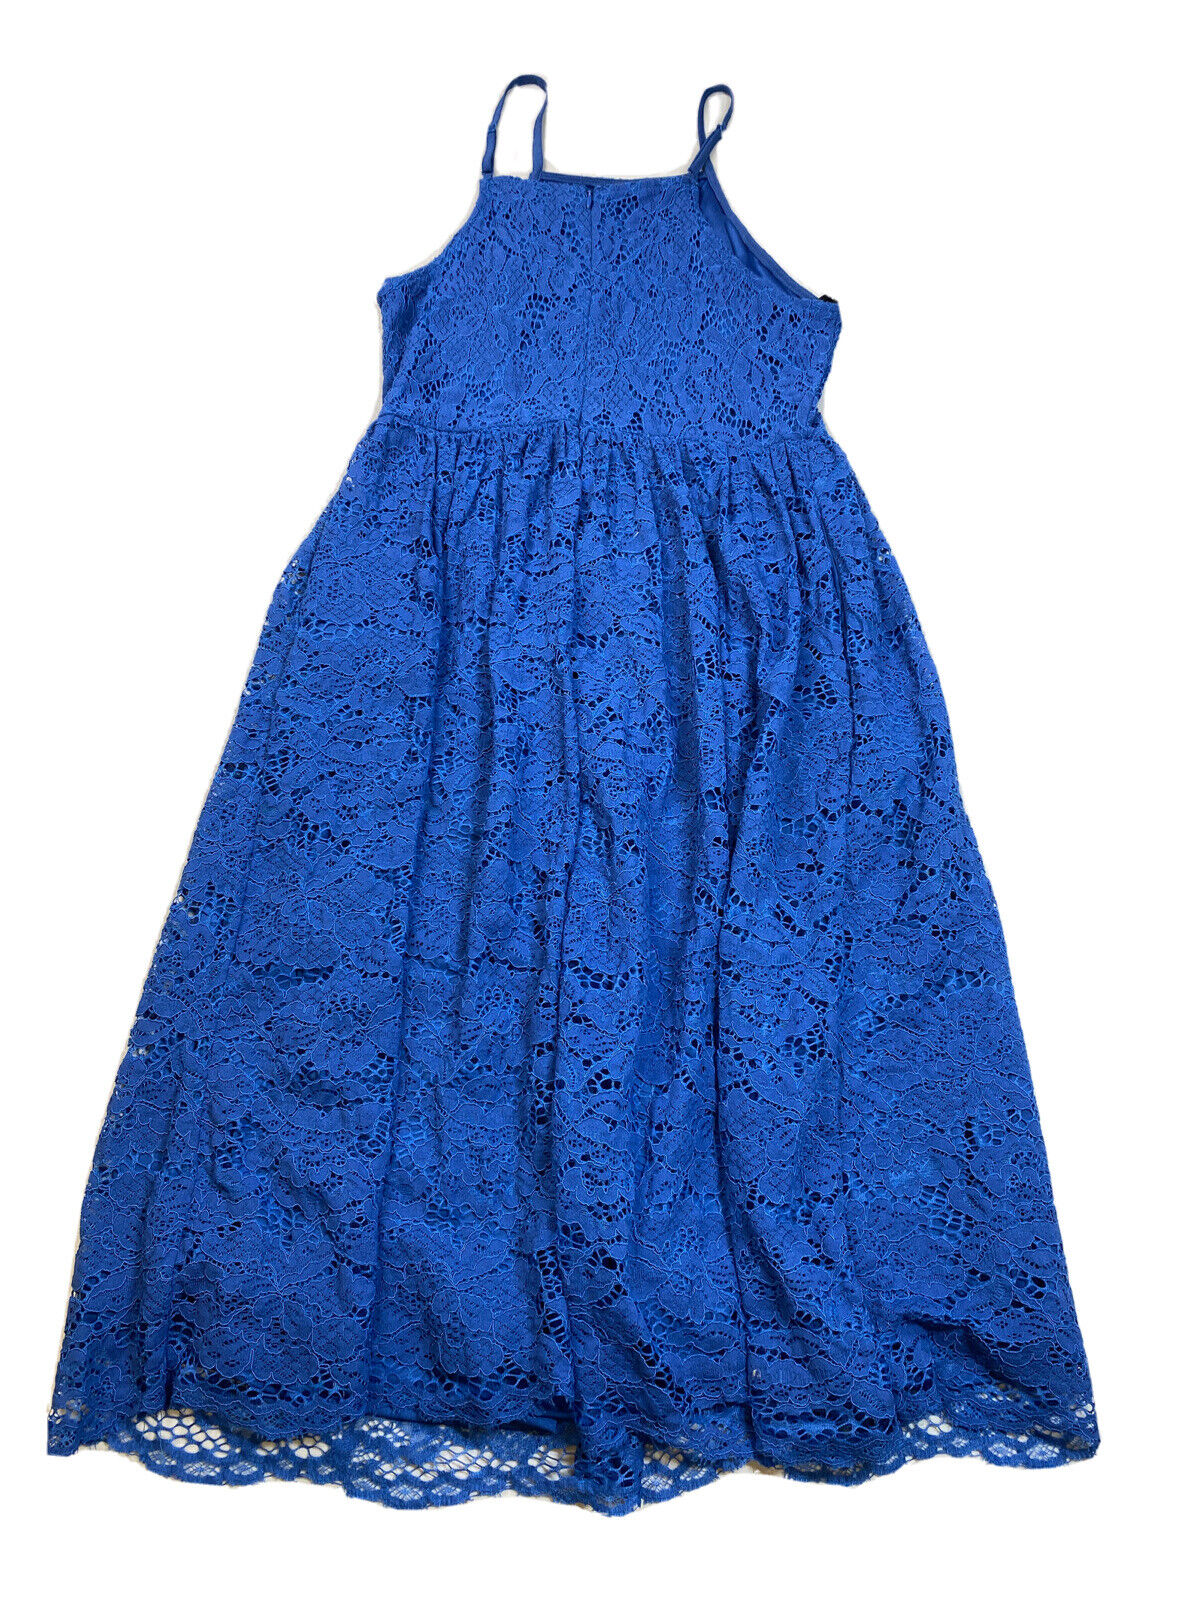 Lulus Women's Blue Lace High Neck Knee Length A-Line Dress - M